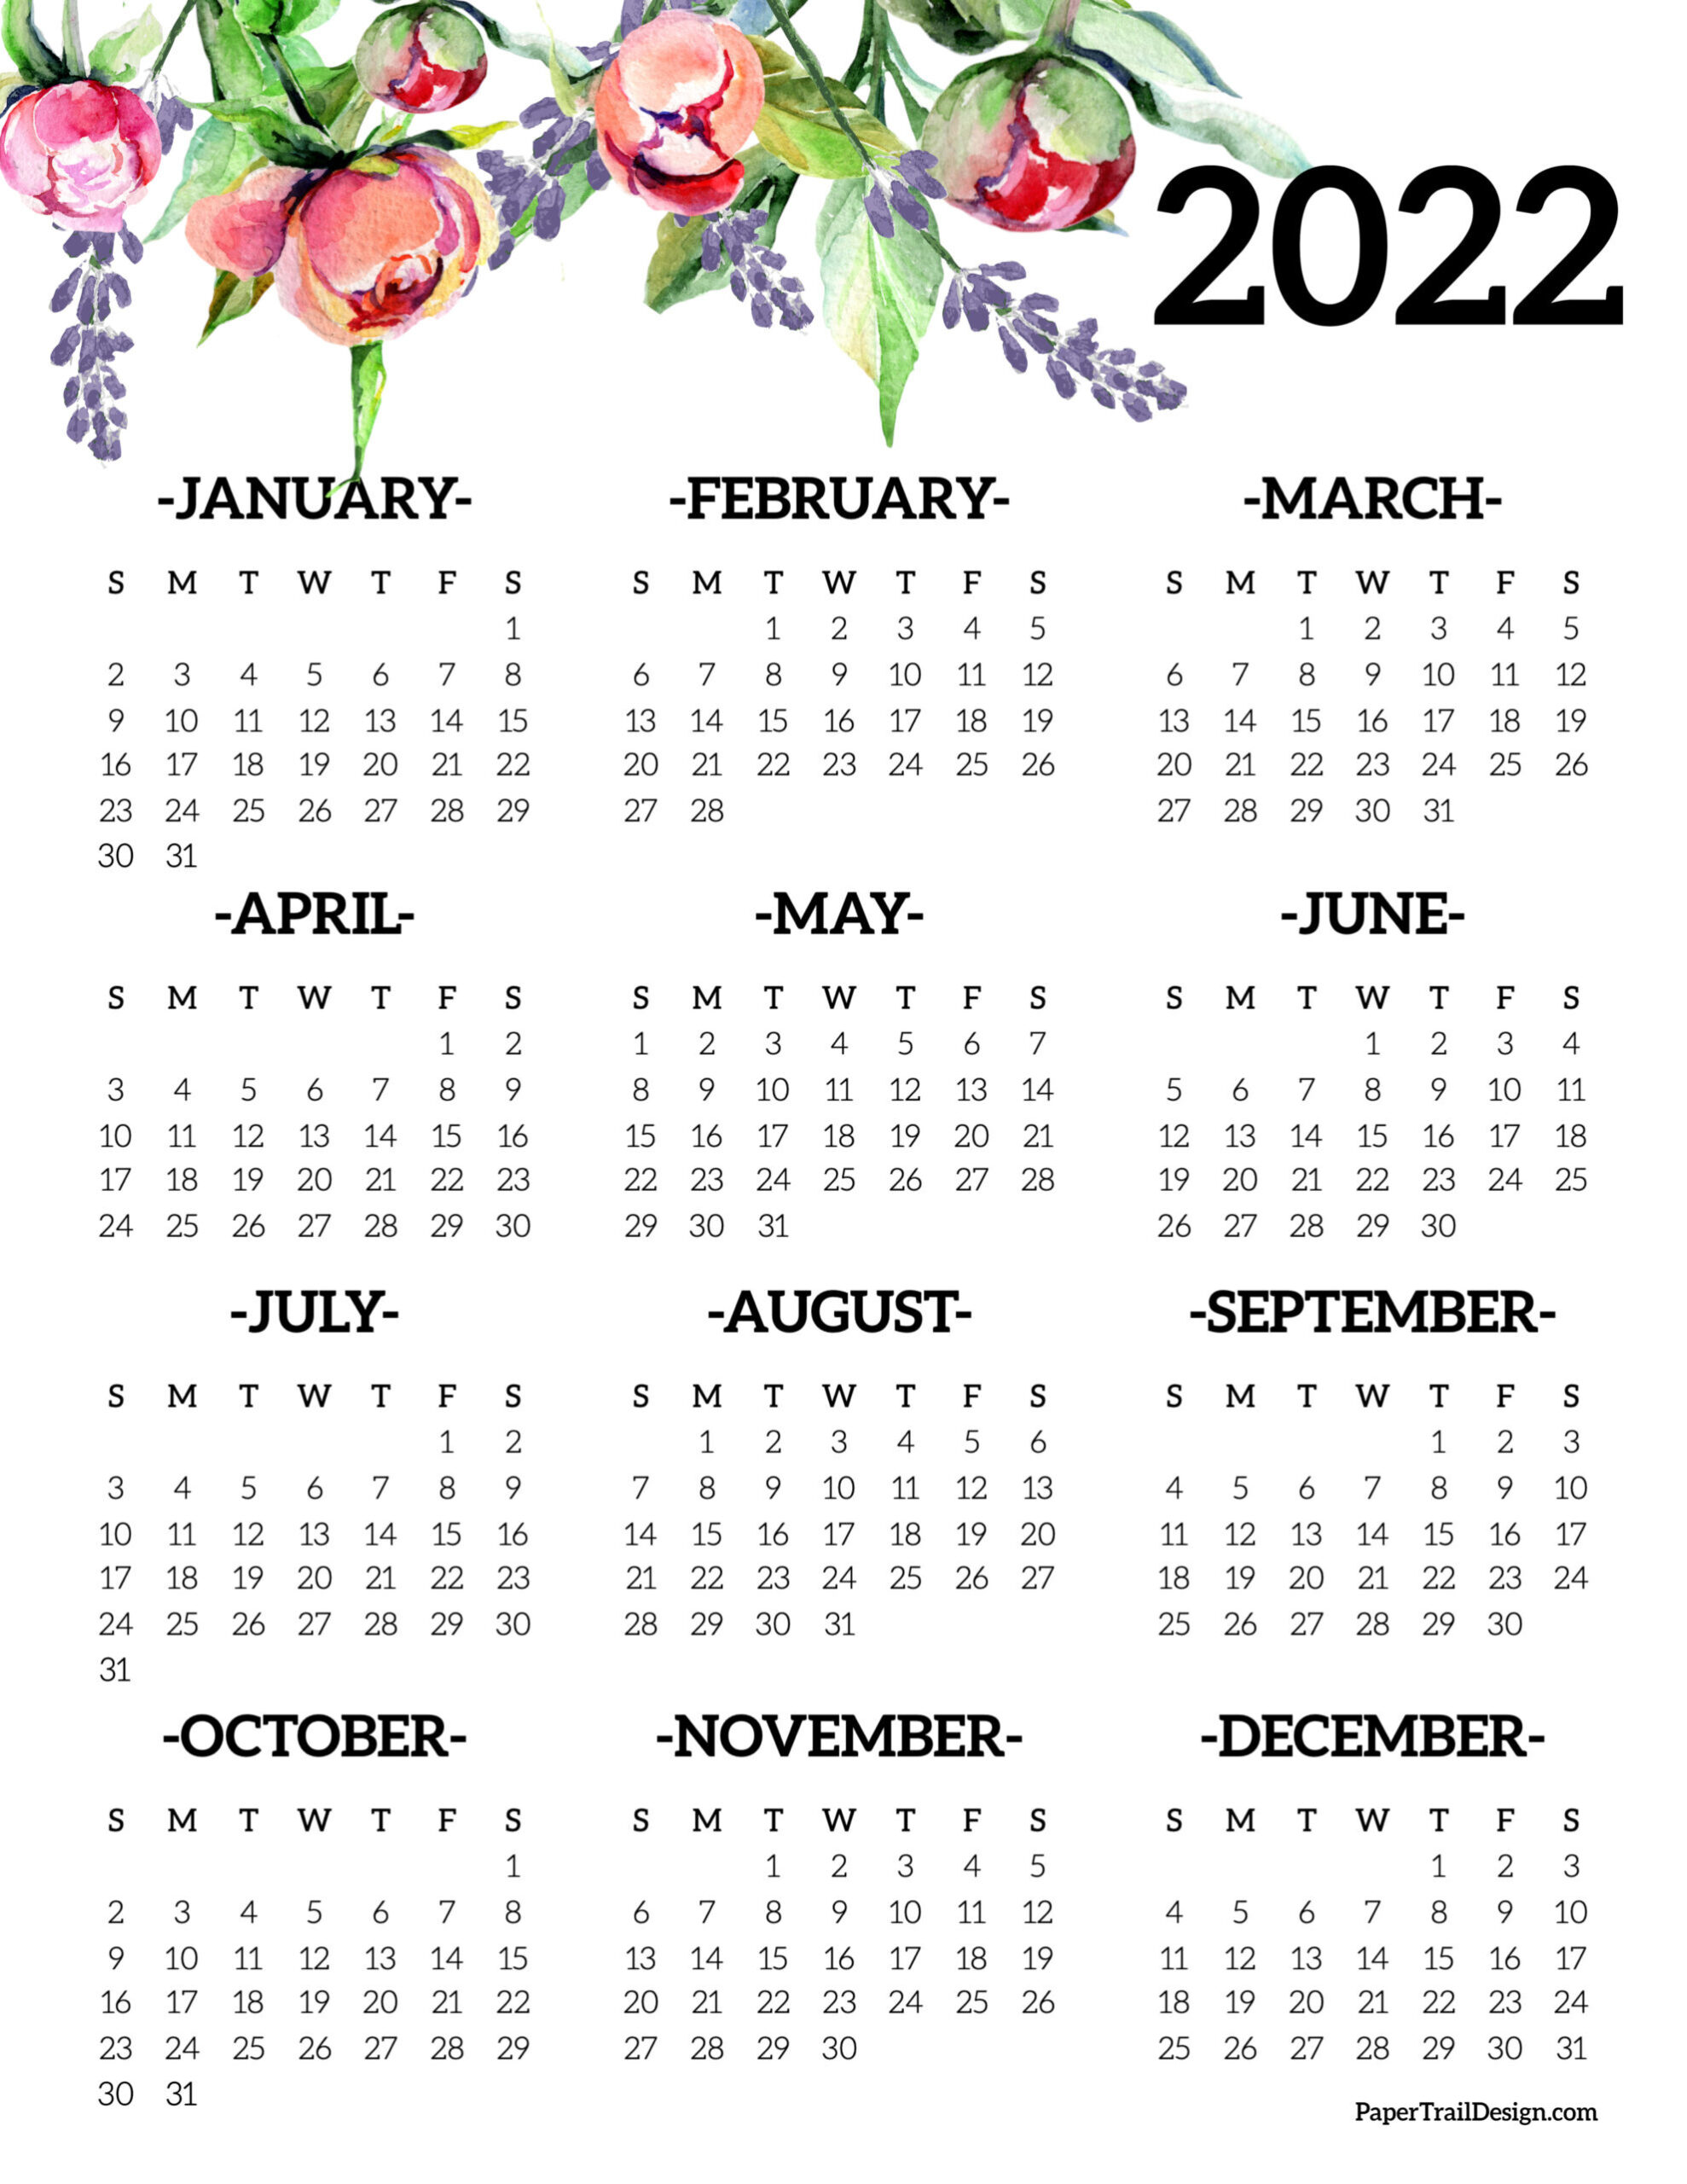 Calendar 2022 Printable One Page - Paper Trail Design  Free Printable Calendar Sheets 2022